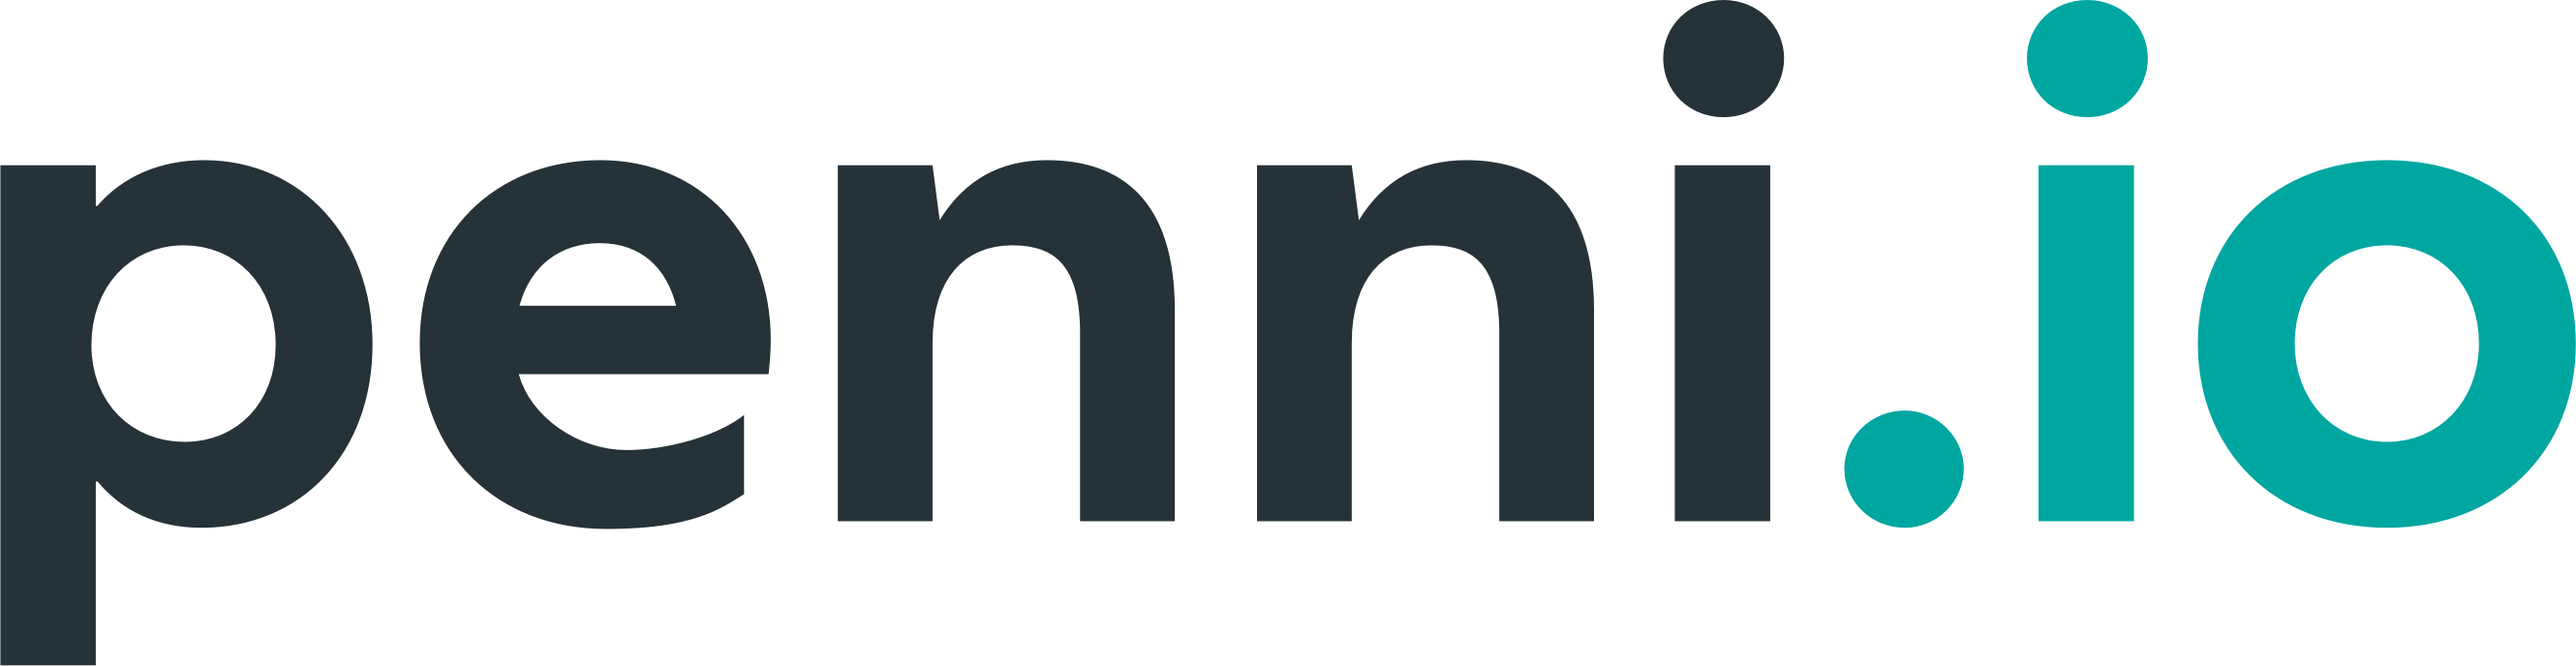 penni-logo-1